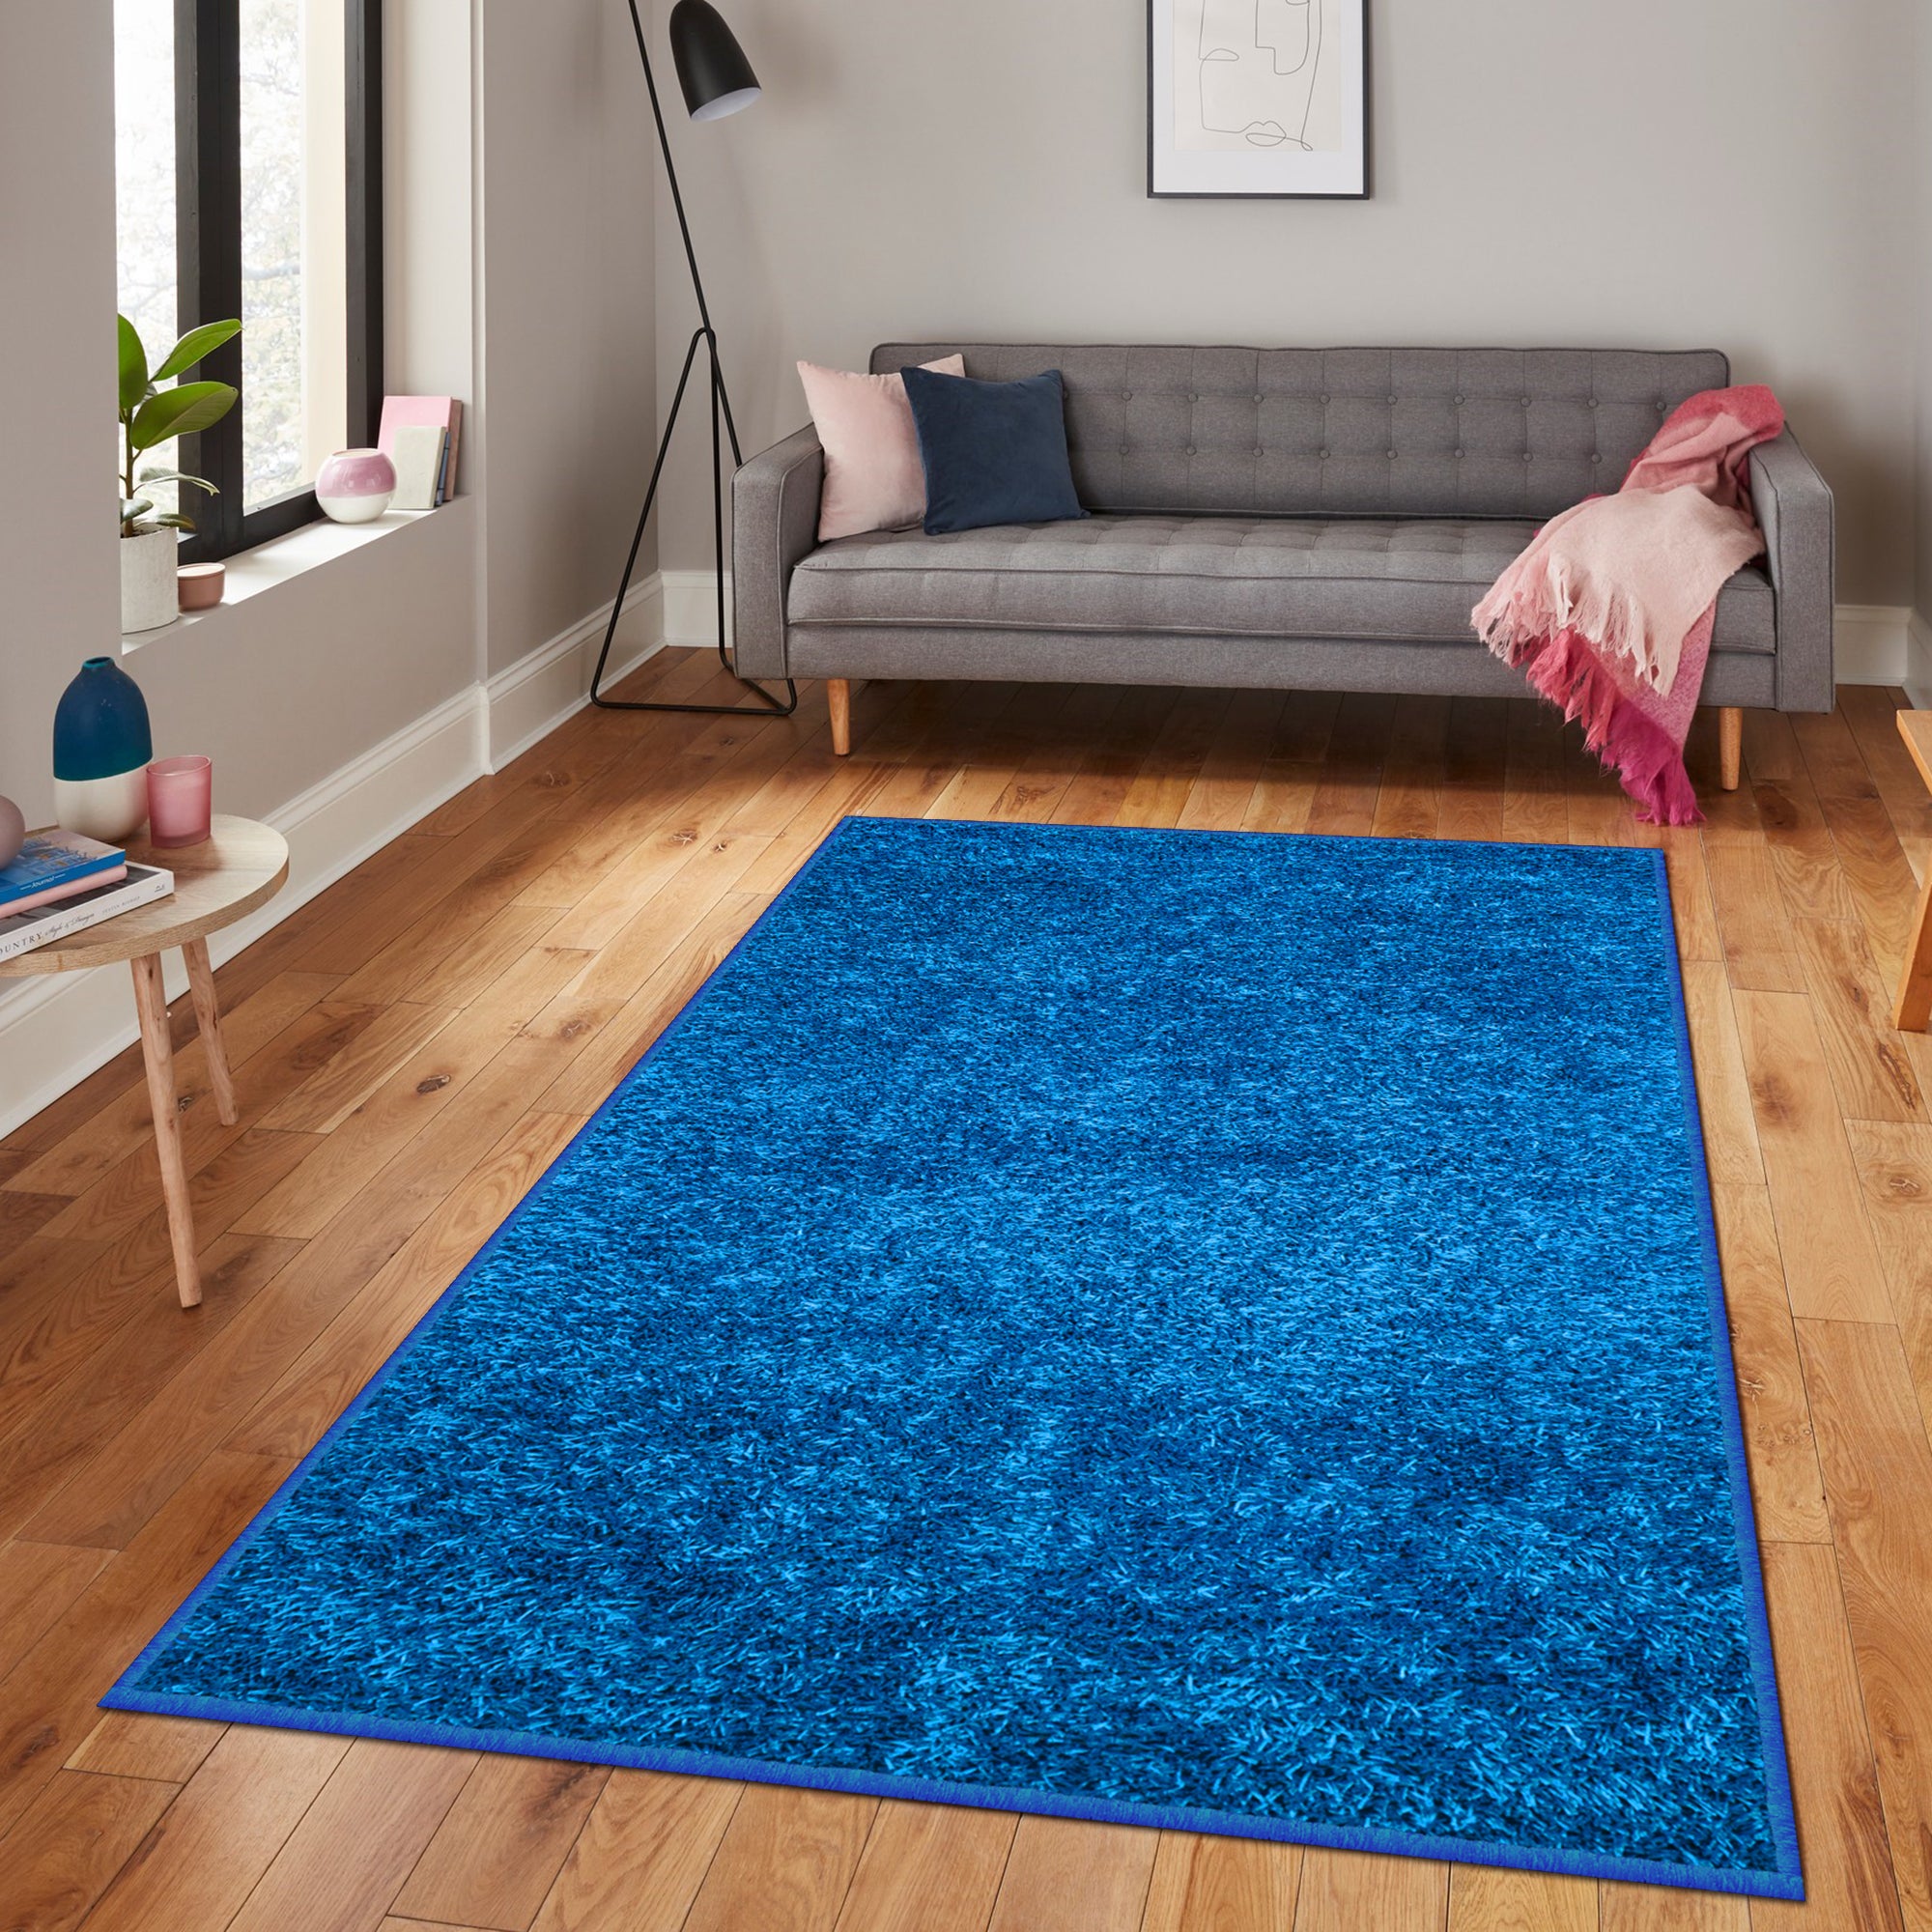 Story@Home Plain Pattern Blue 1 PC Carpet